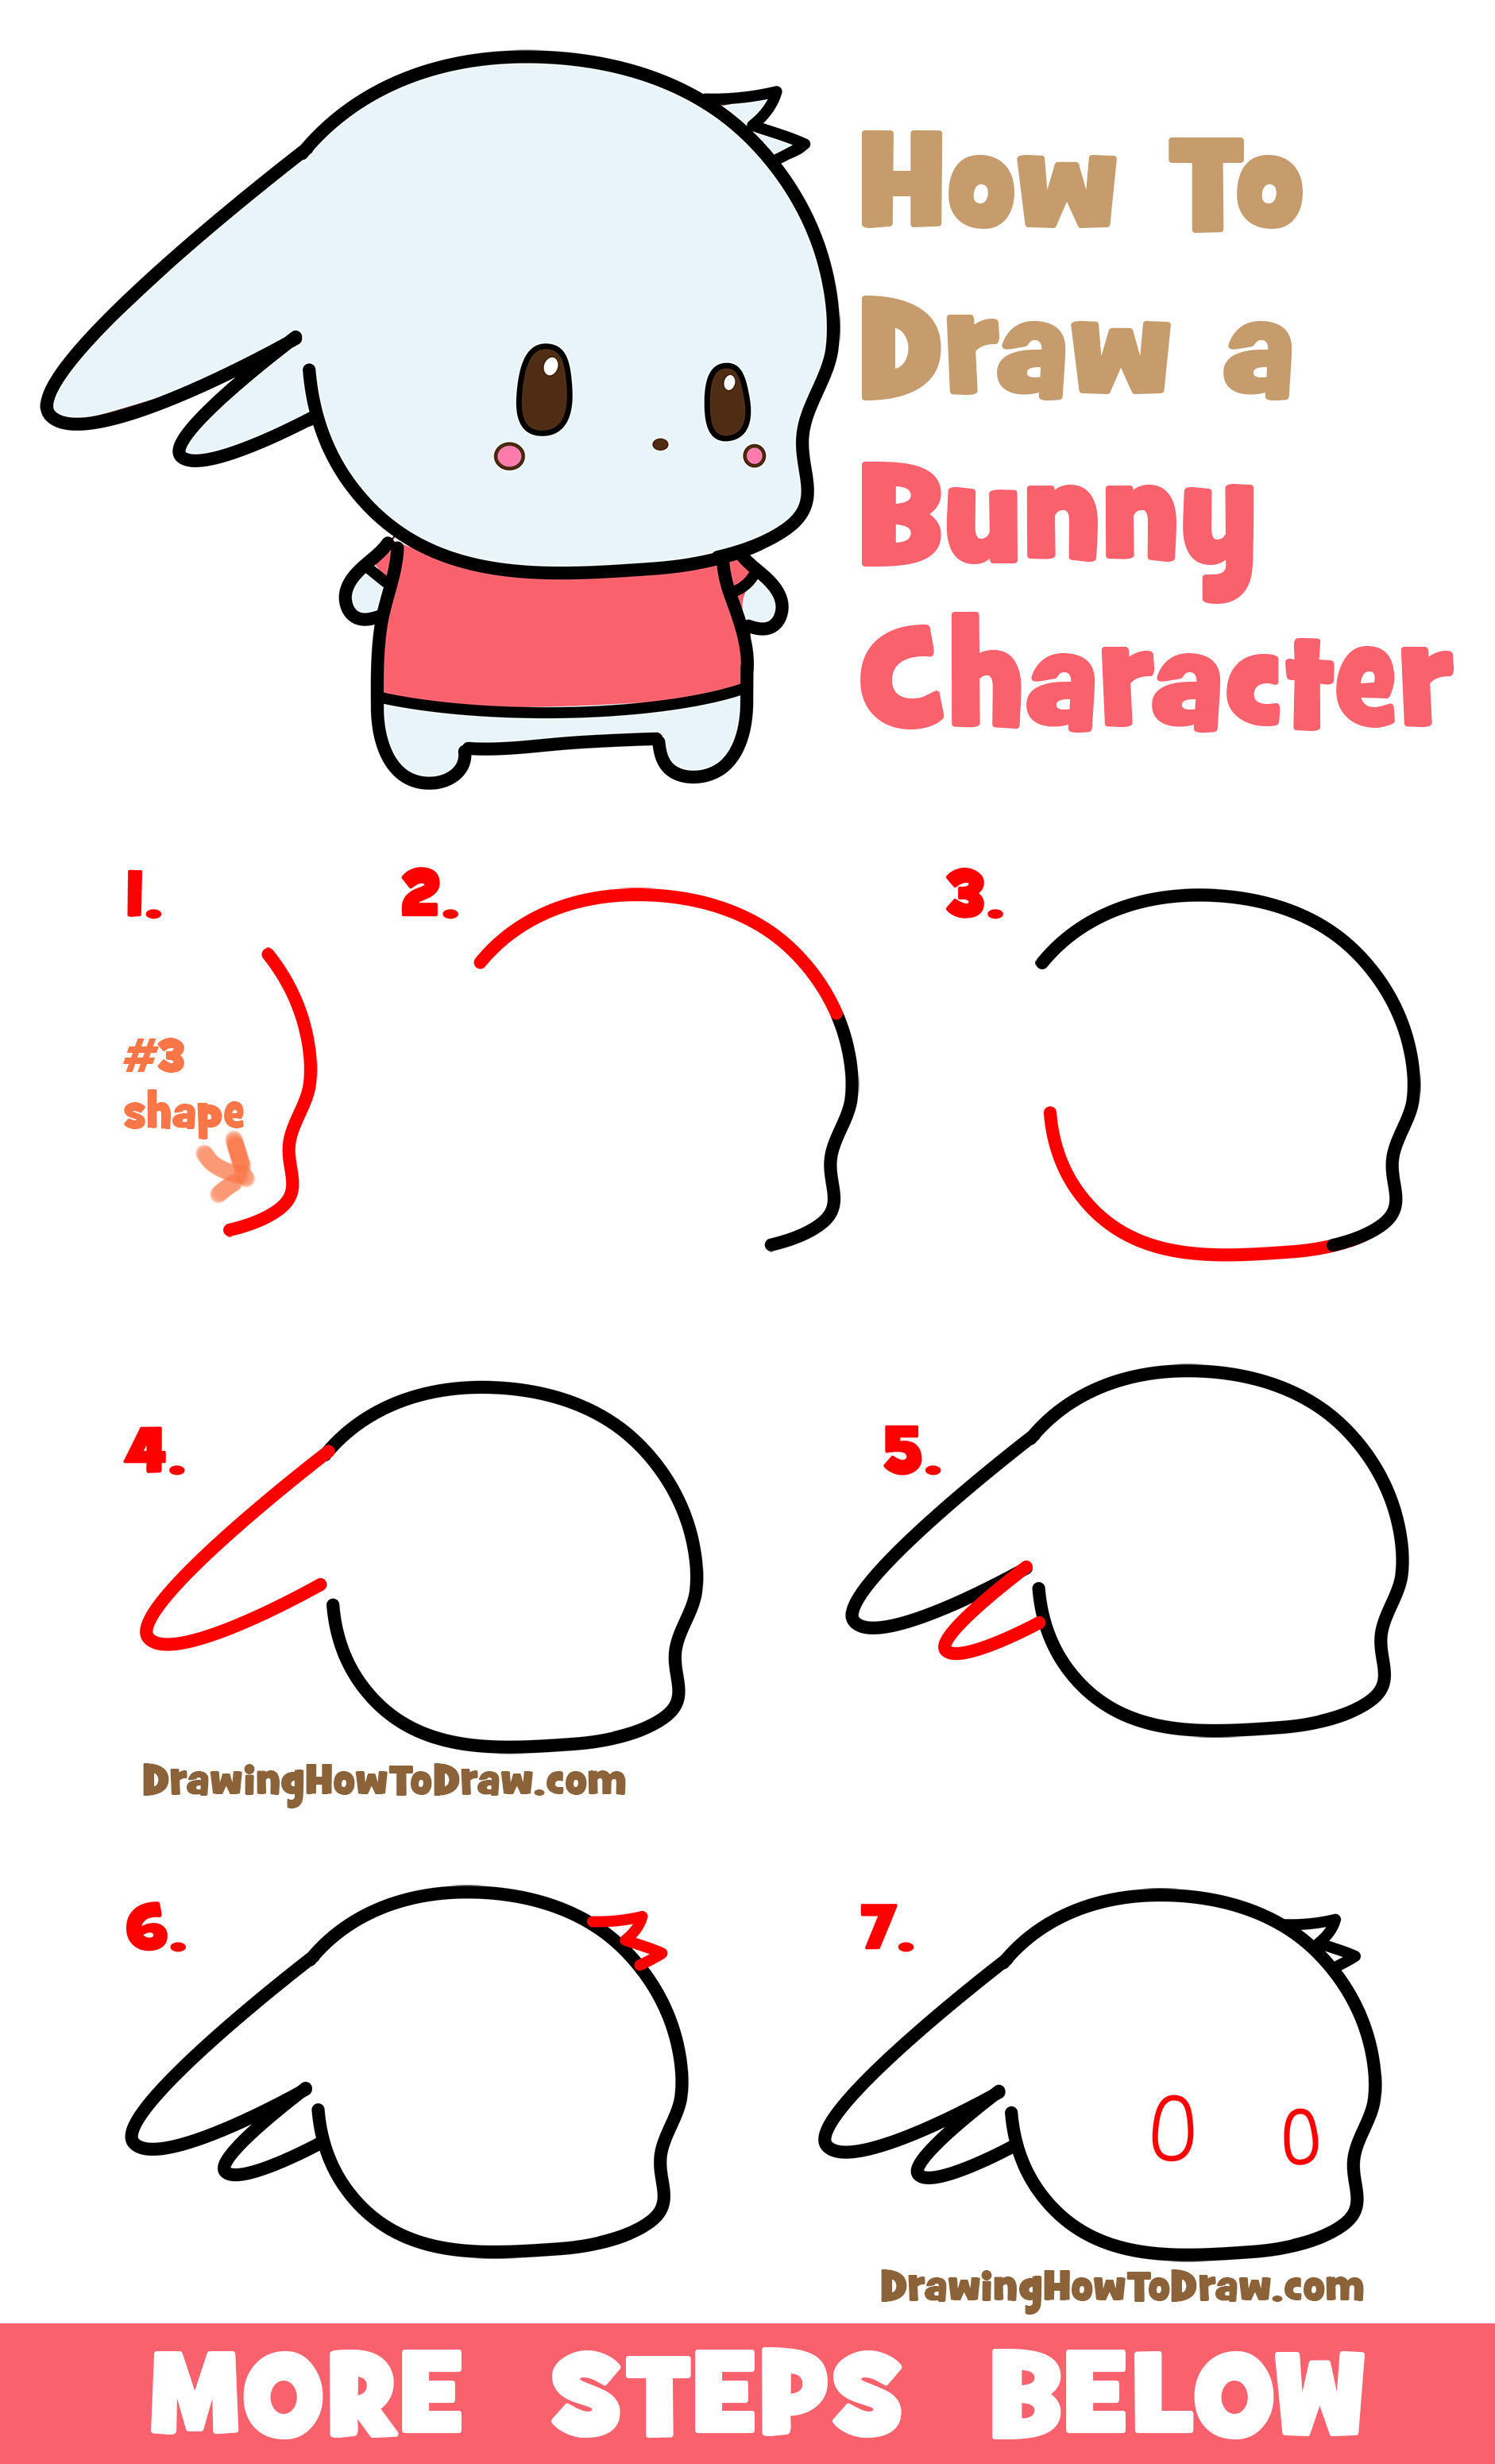 Kawaii Bunny - Other & Anime Background Wallpapers on Desktop Nexus (Image  303006)